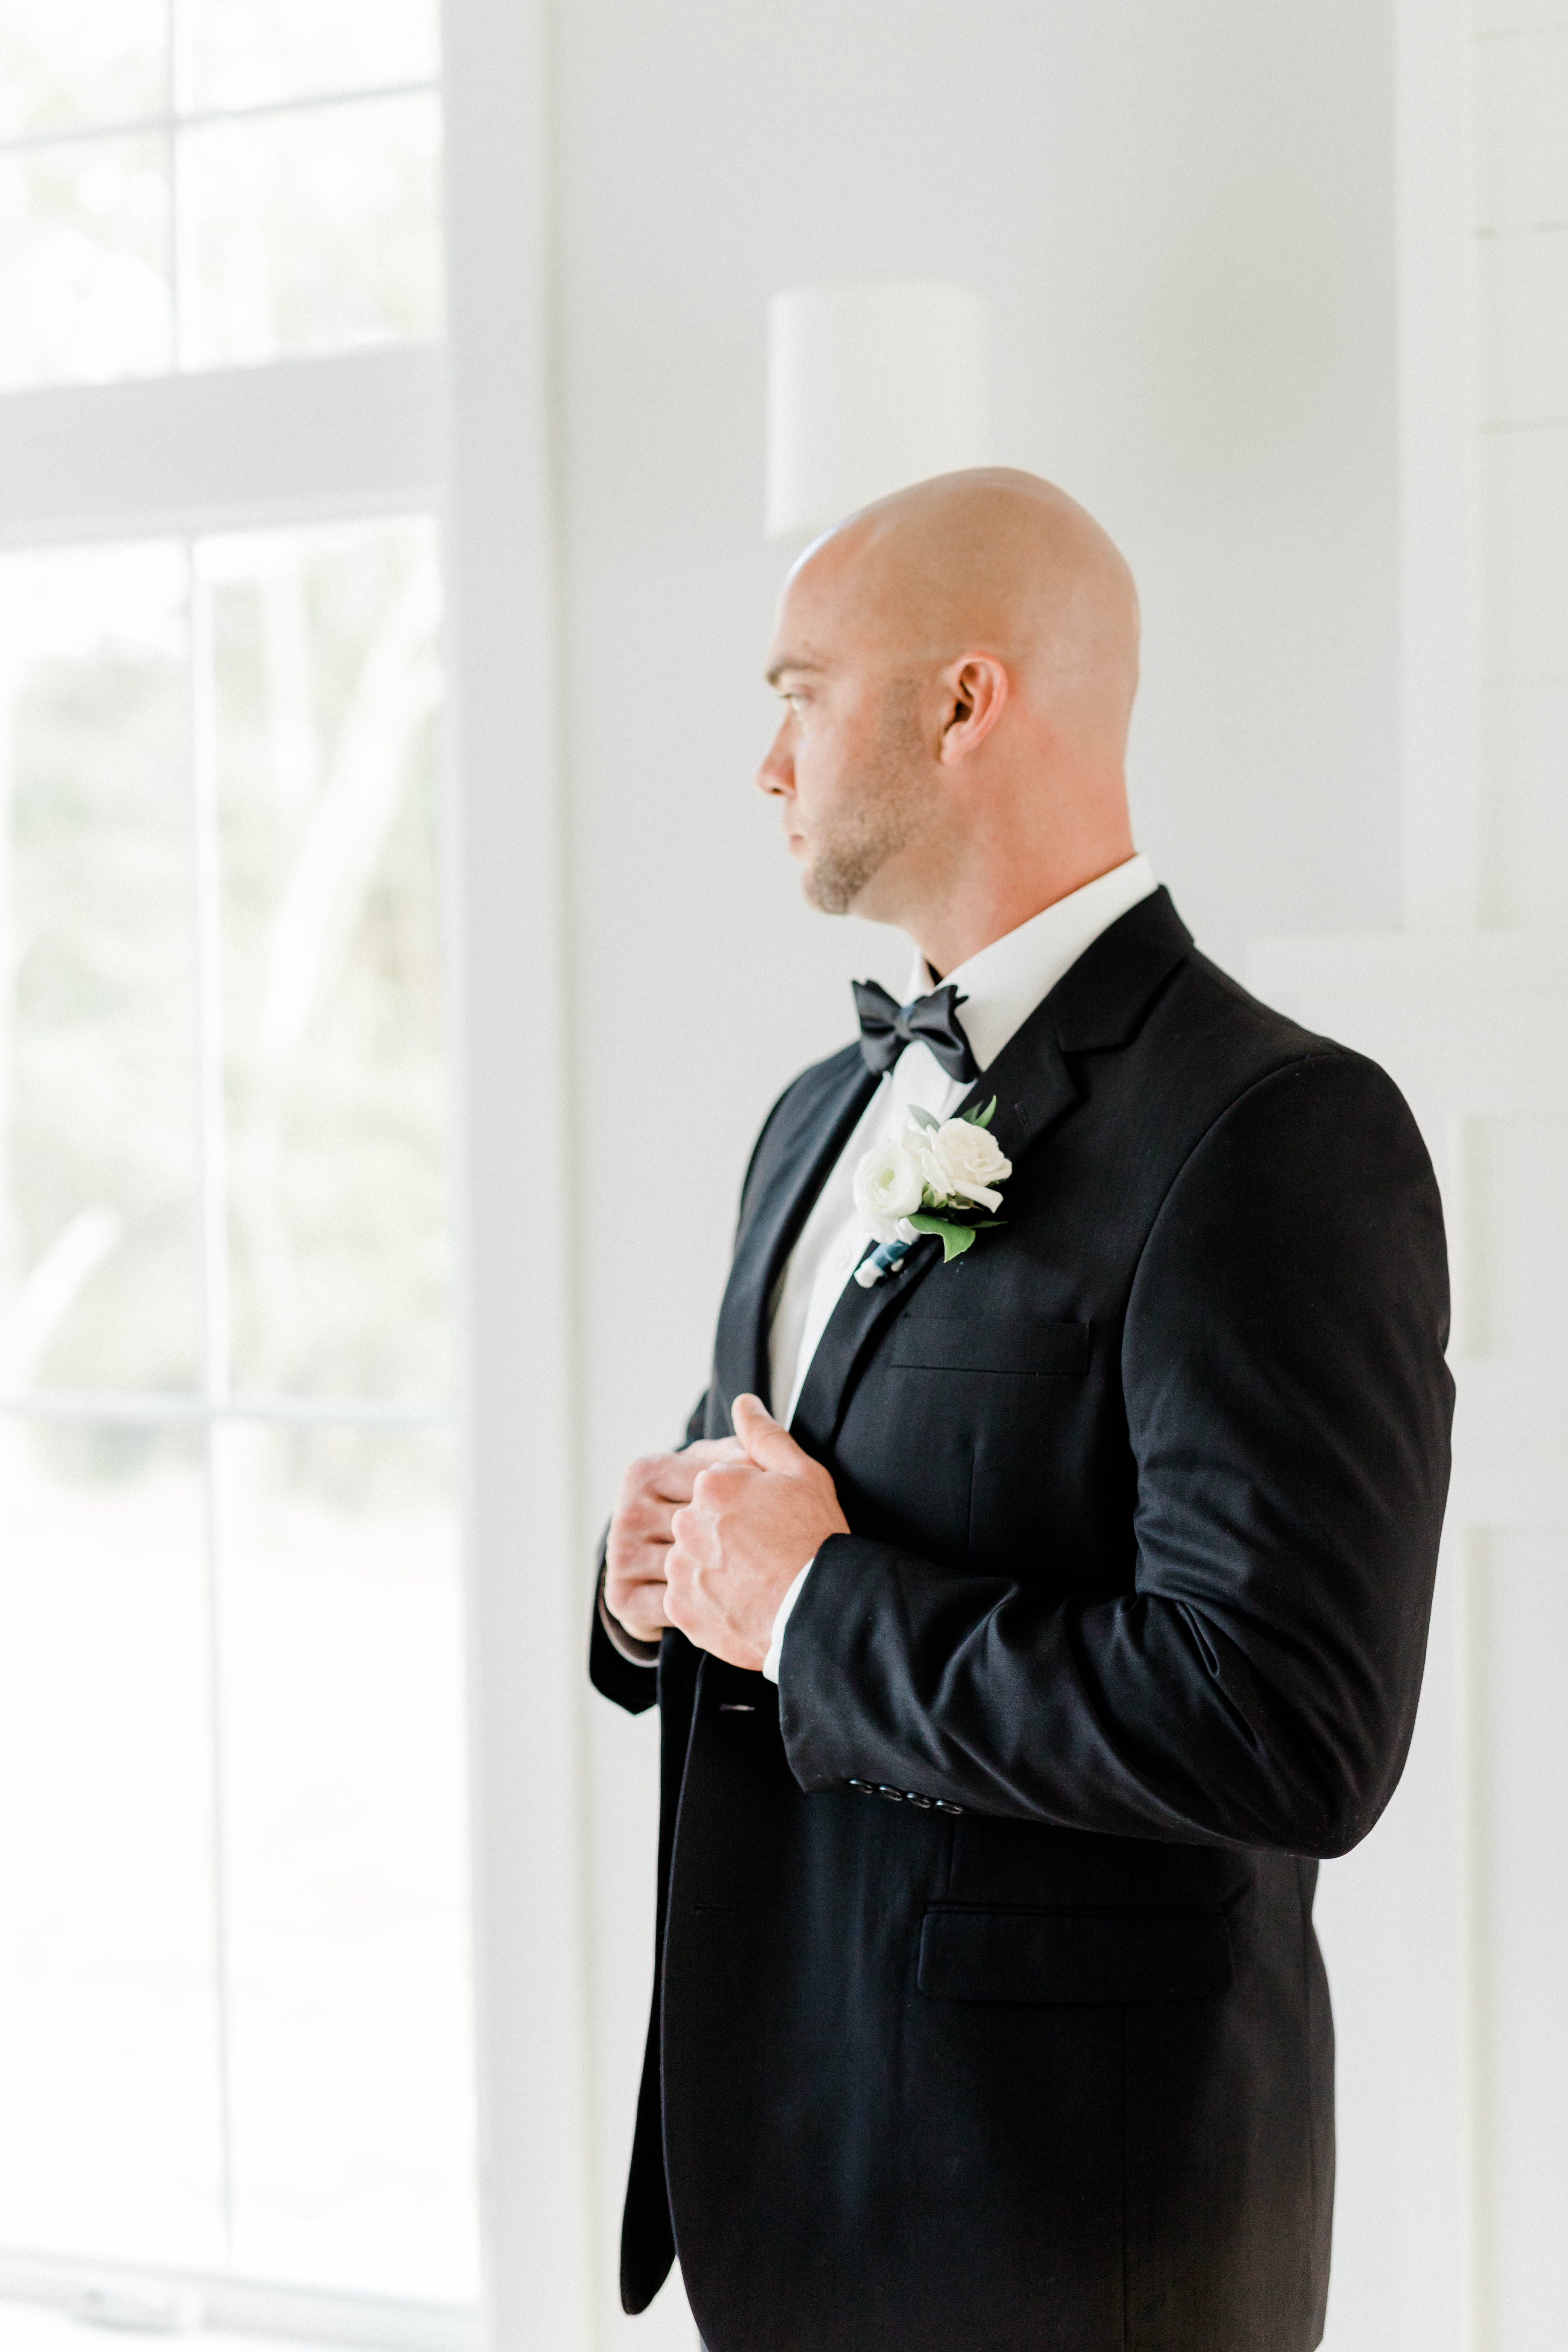 Groom at window - Natural Light - Black Tuxedo - Elegant Wedding - Fine Art